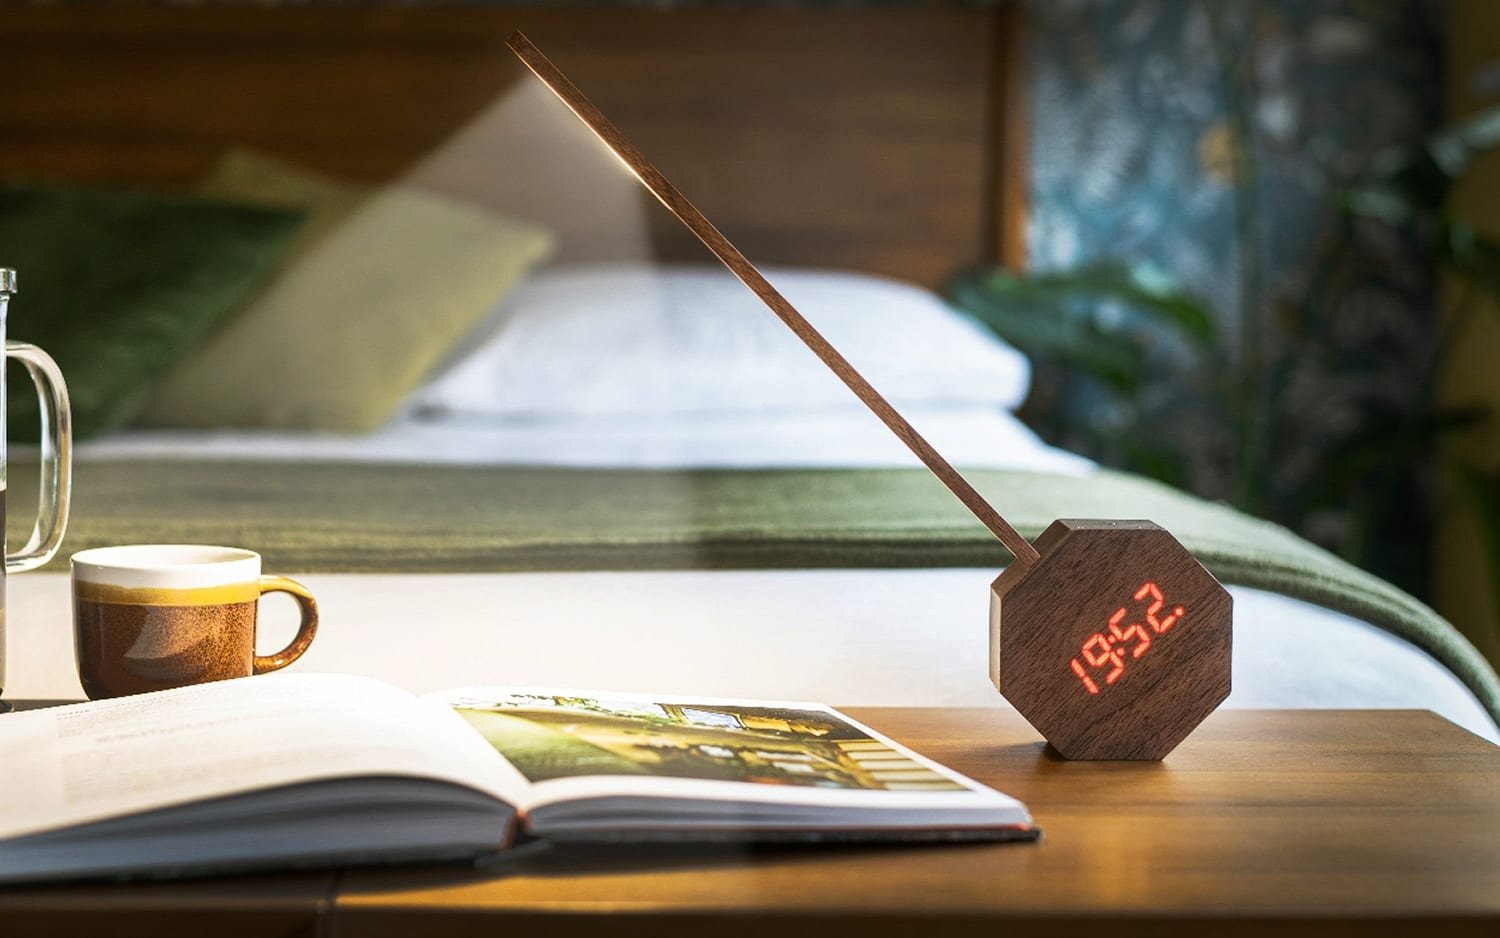 Gingko Octagon One Alarm Clock Desk Light